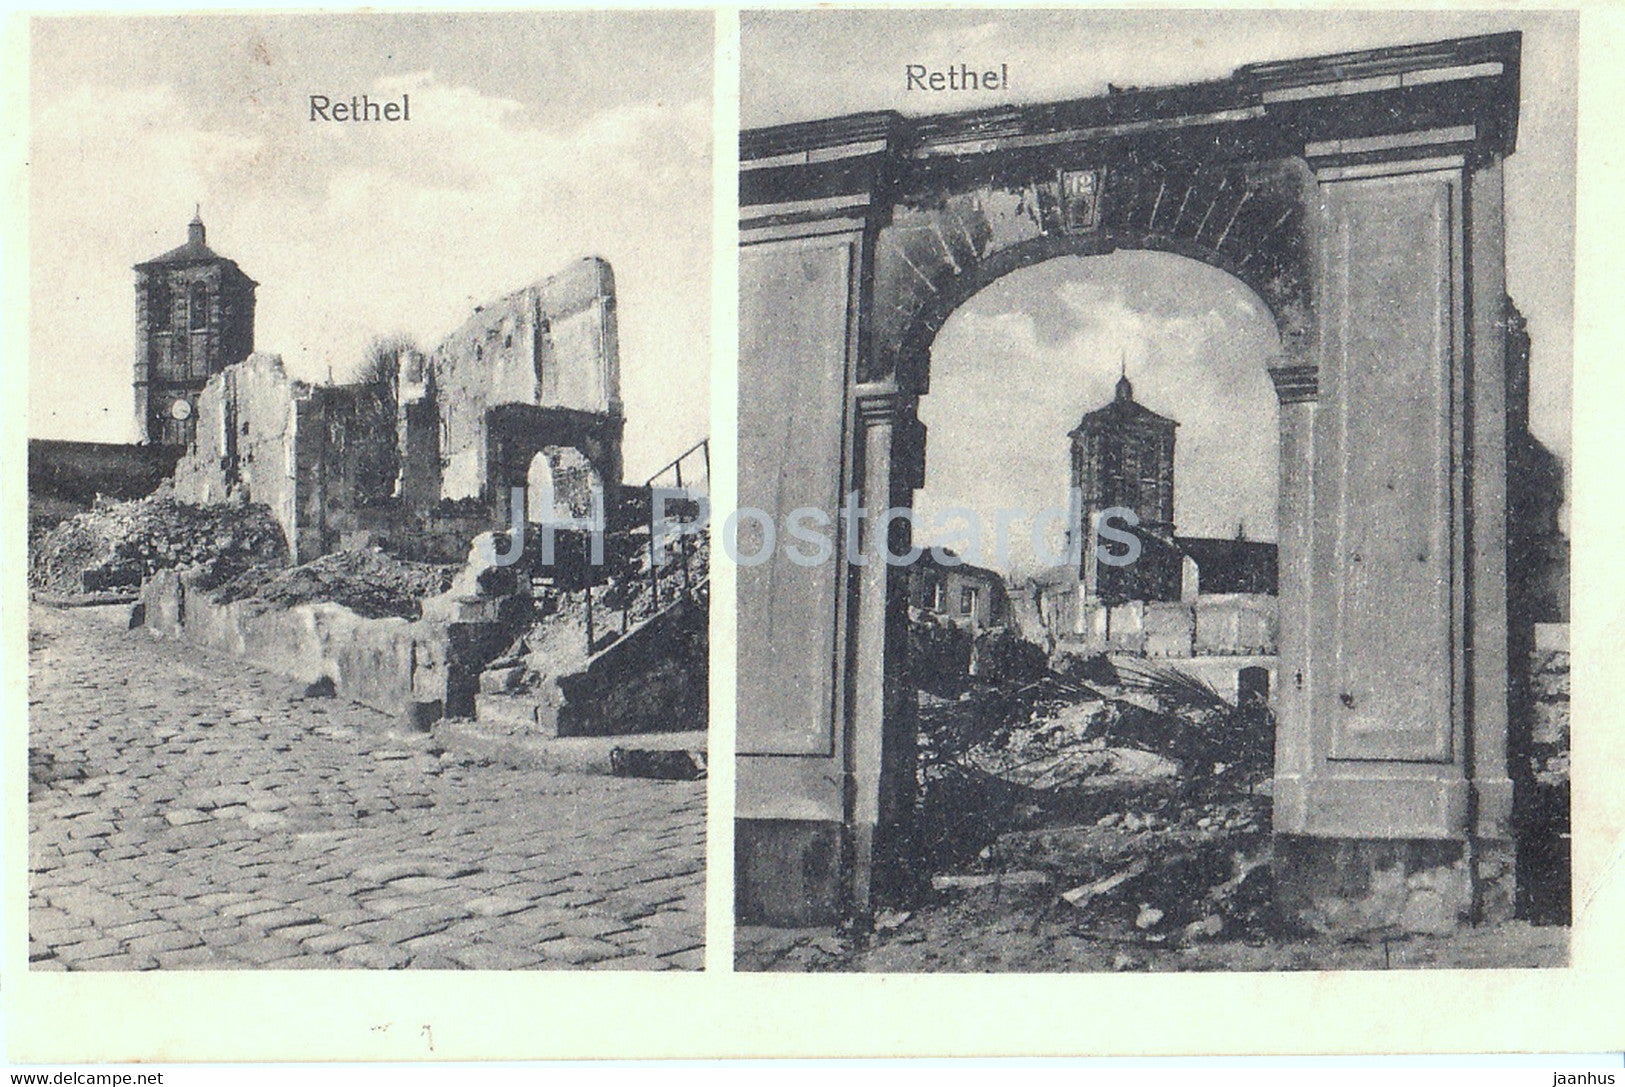 Rethel - Infanterie Regiment Nr 103 - Feldpost - Military - old postcard - 1916 - France - used - JH Postcards